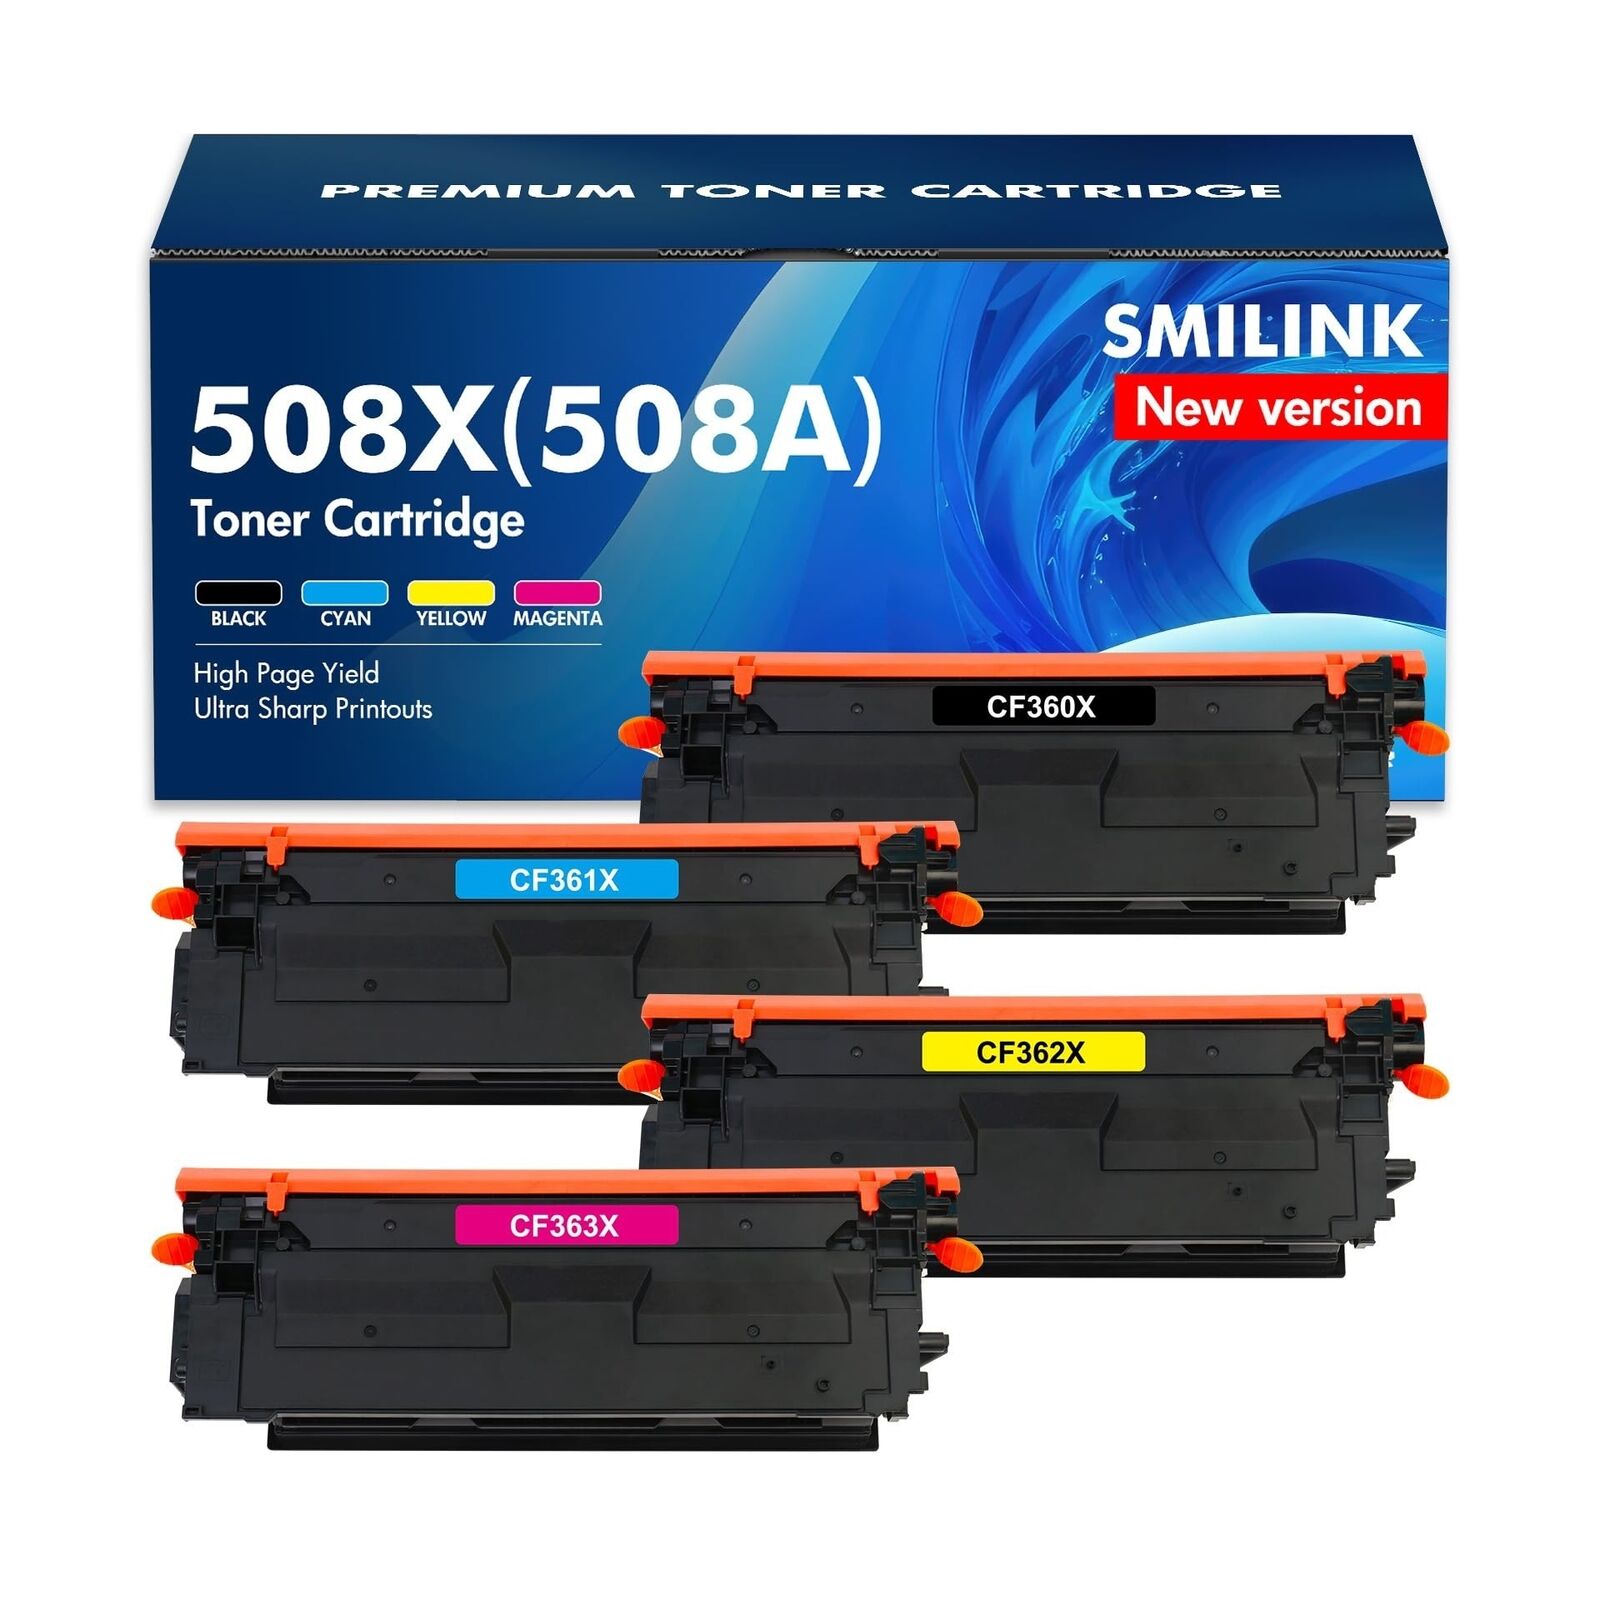 508X 508A Toner Cartridge Set: Compatible Replacement for HP 508X 508A Laserj...